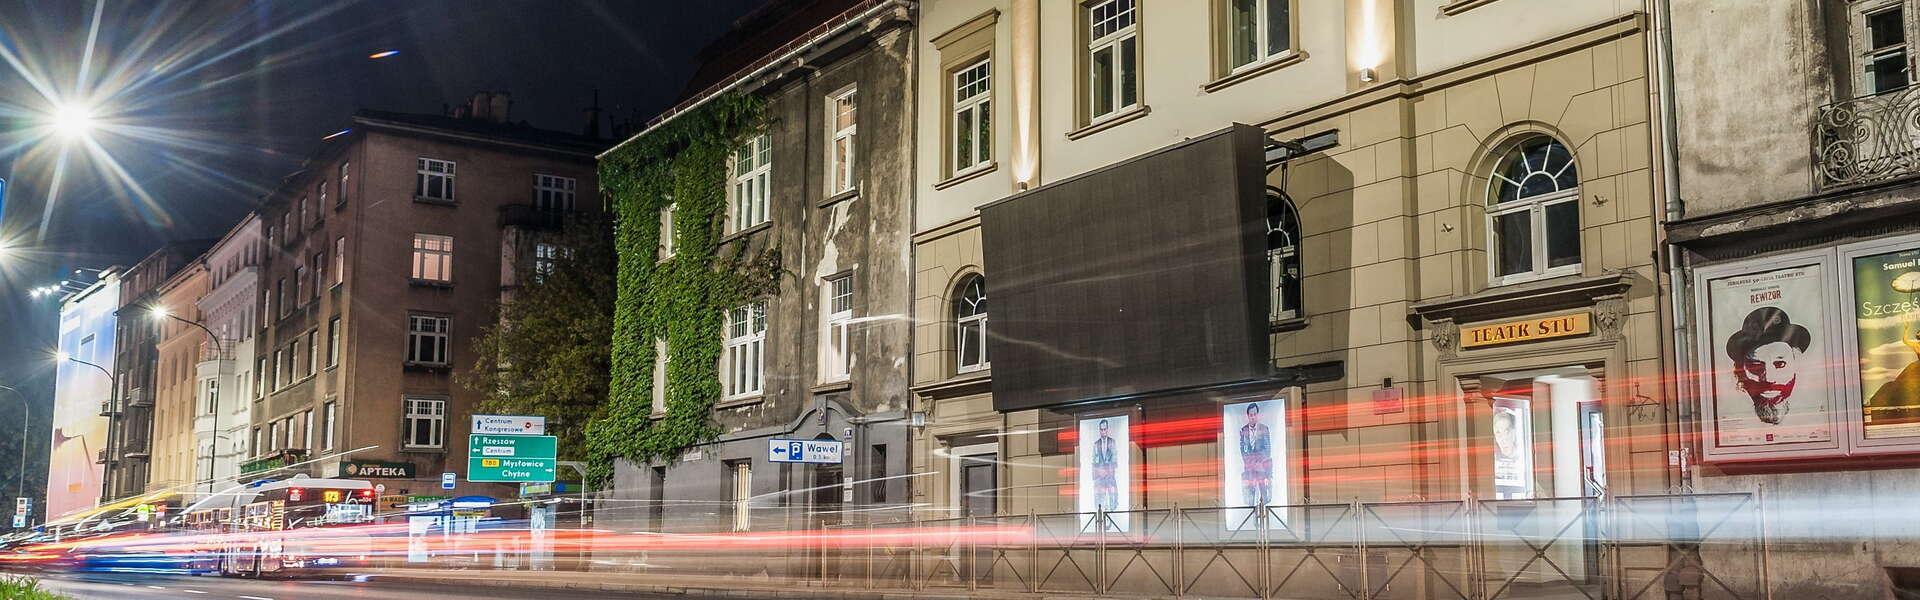 The Stu Theatre building in the line of facilities at Zygmunt Krasiński Avenue in Kraków seen at night